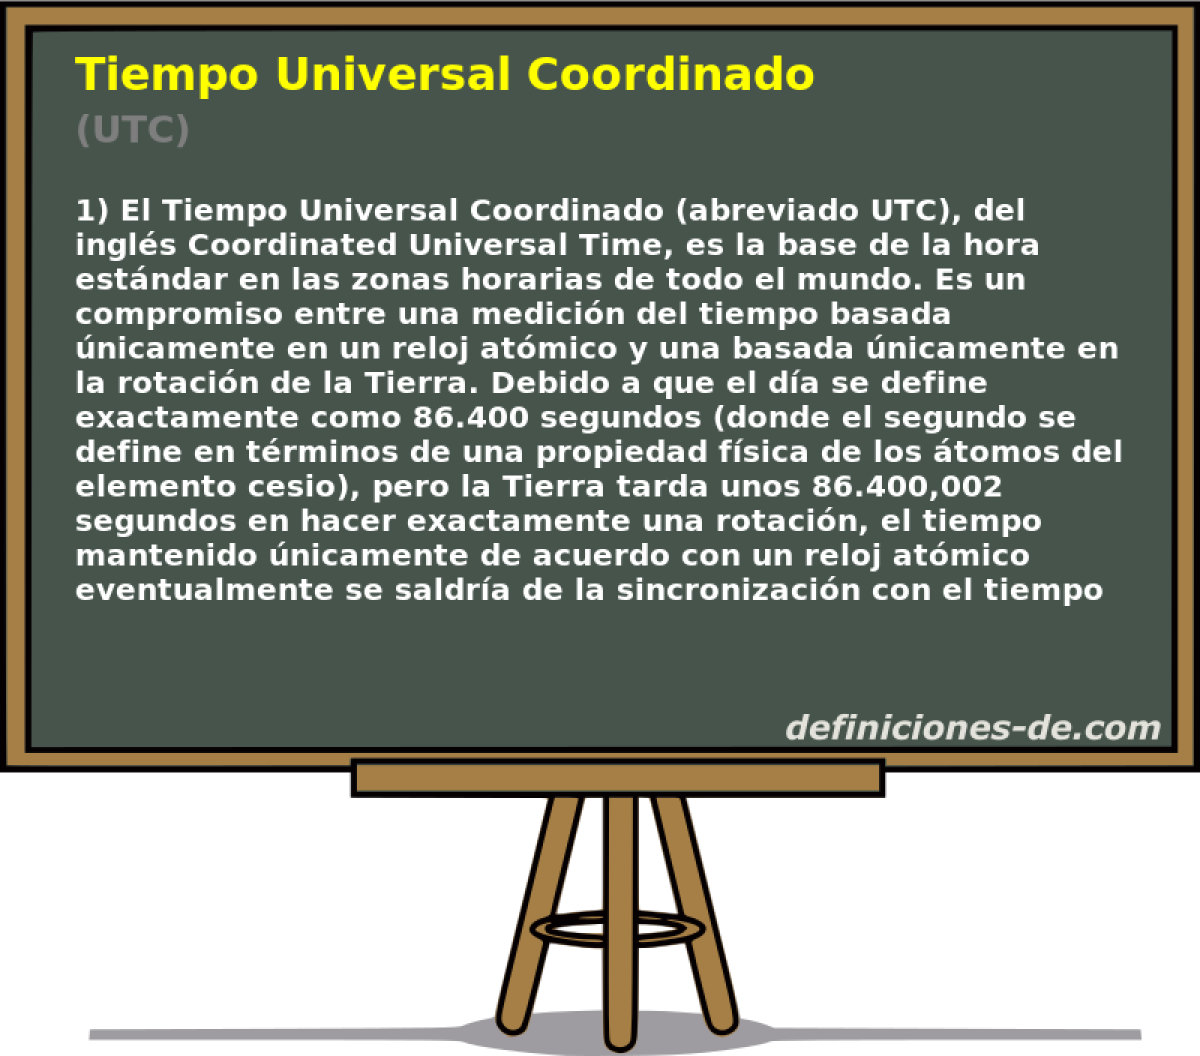 Tiempo Universal Coordinado (UTC)